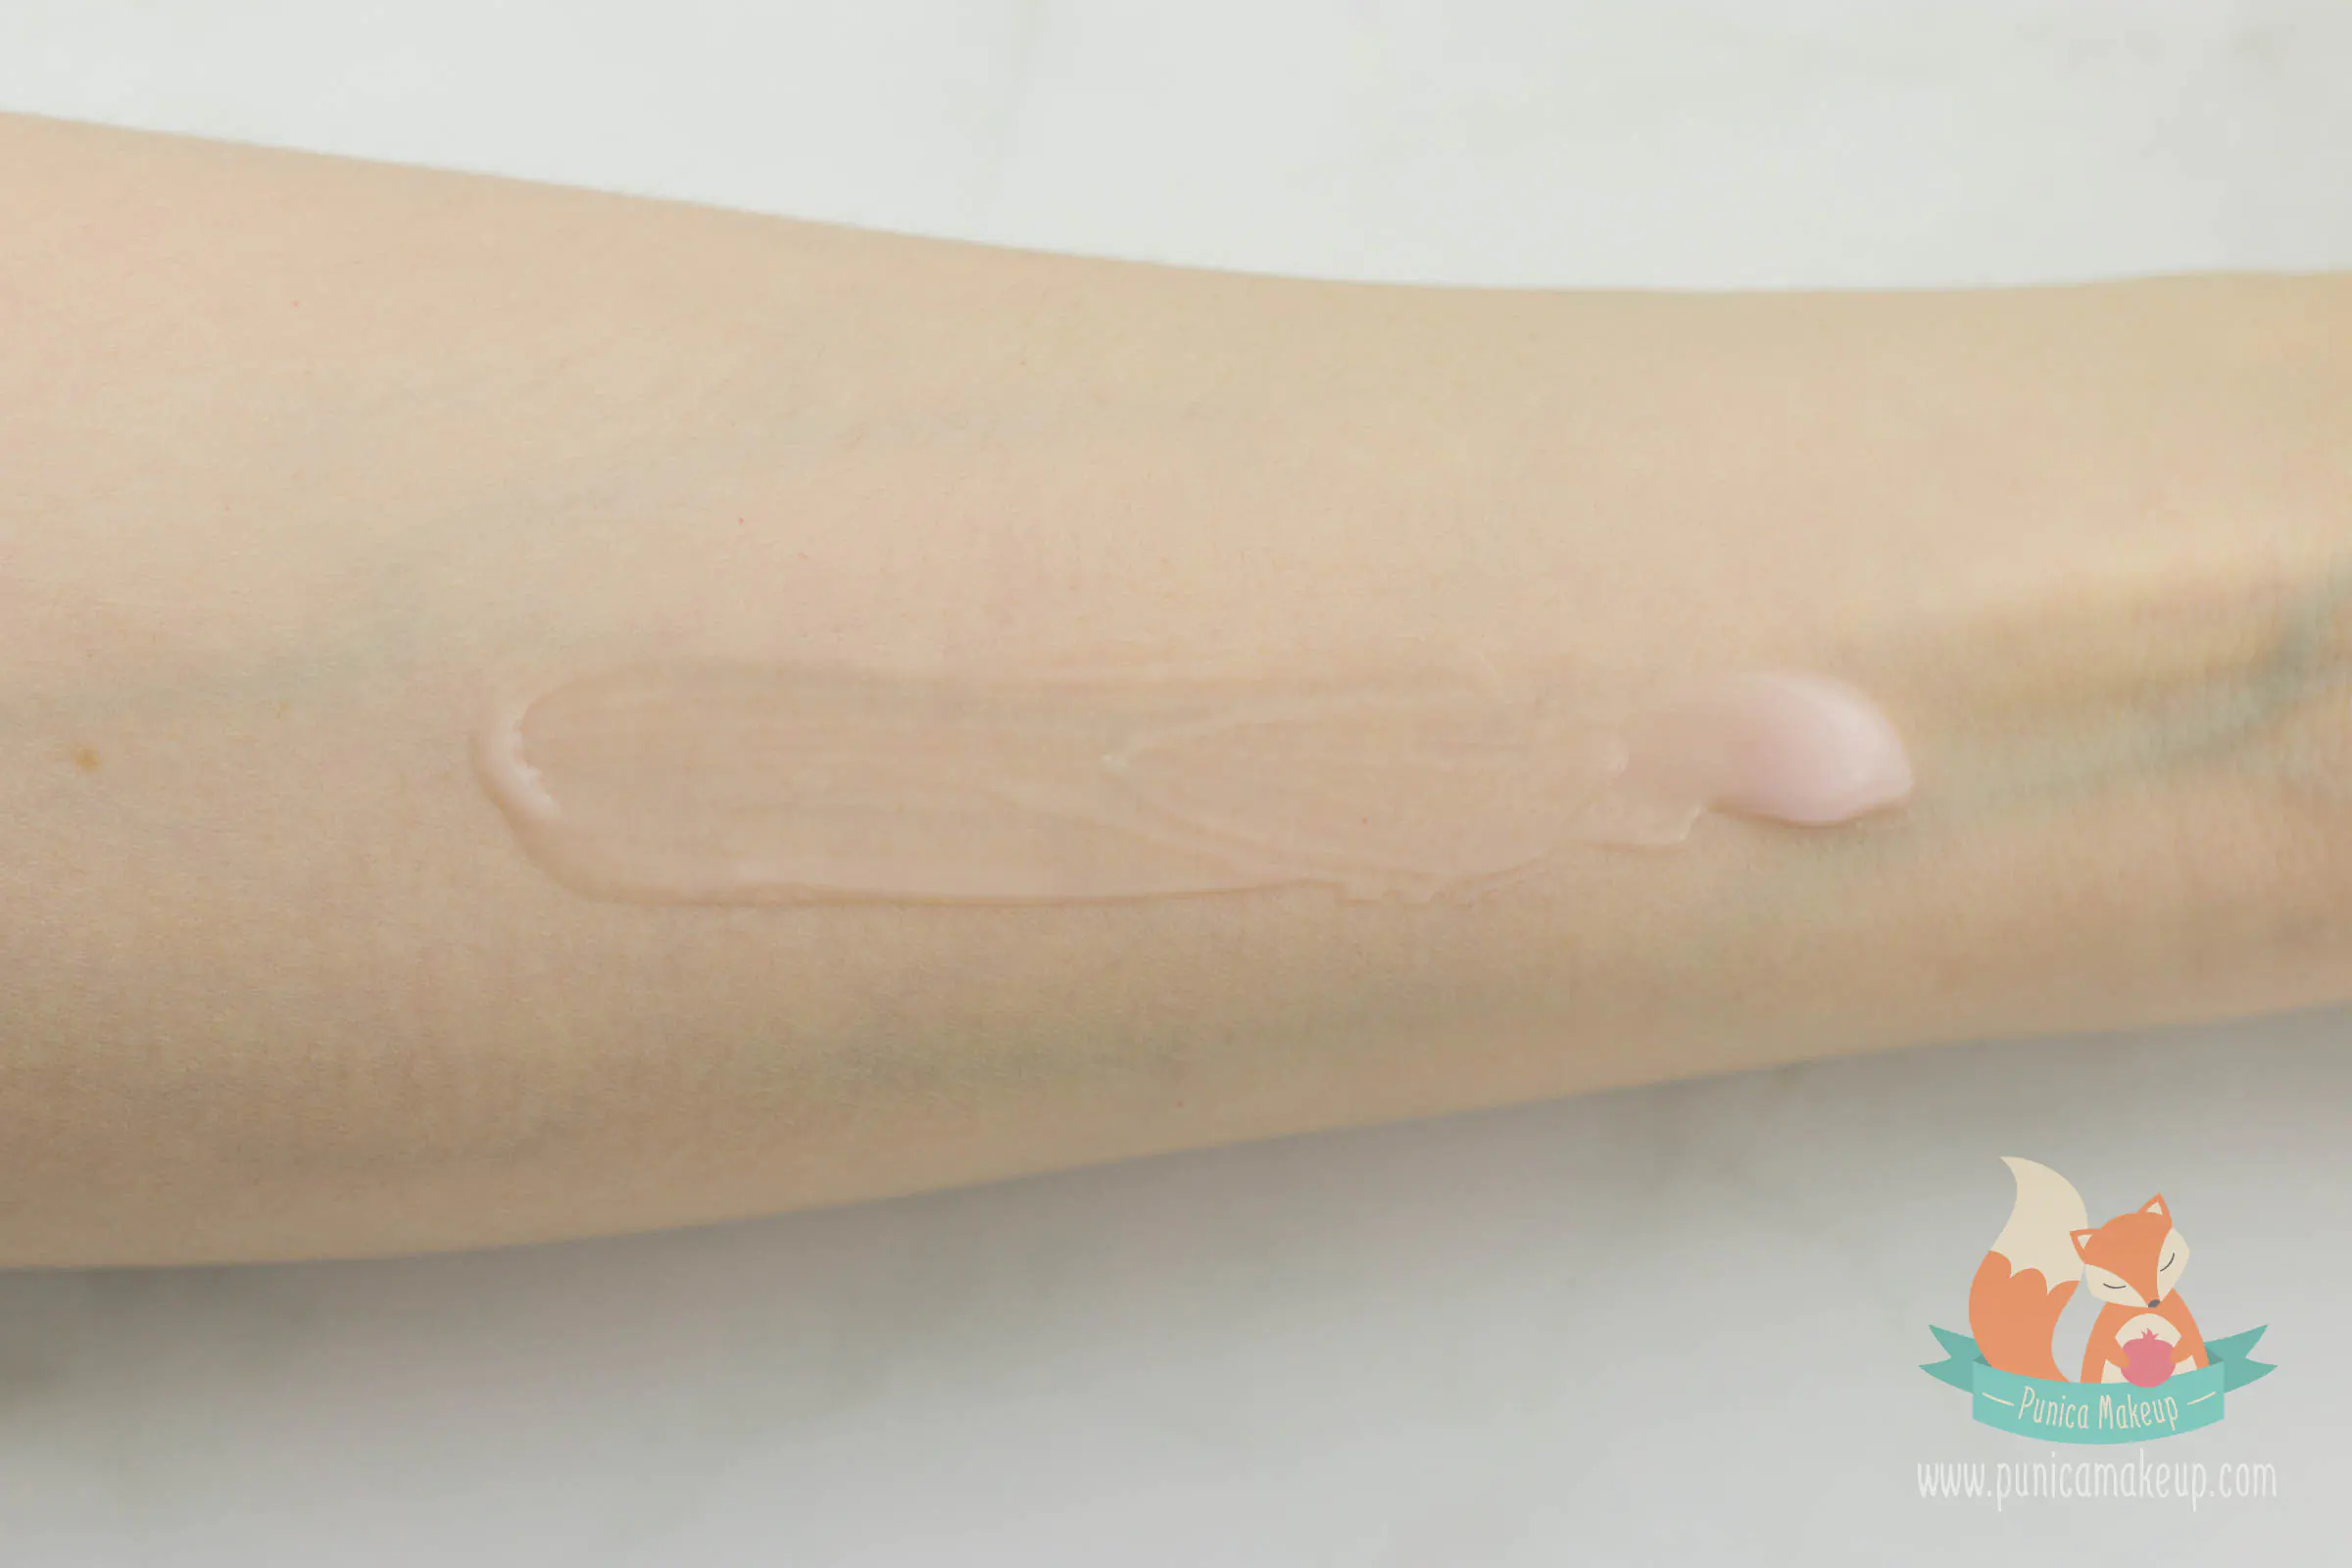 Laura Mercier Foundation Primer tested on my skin